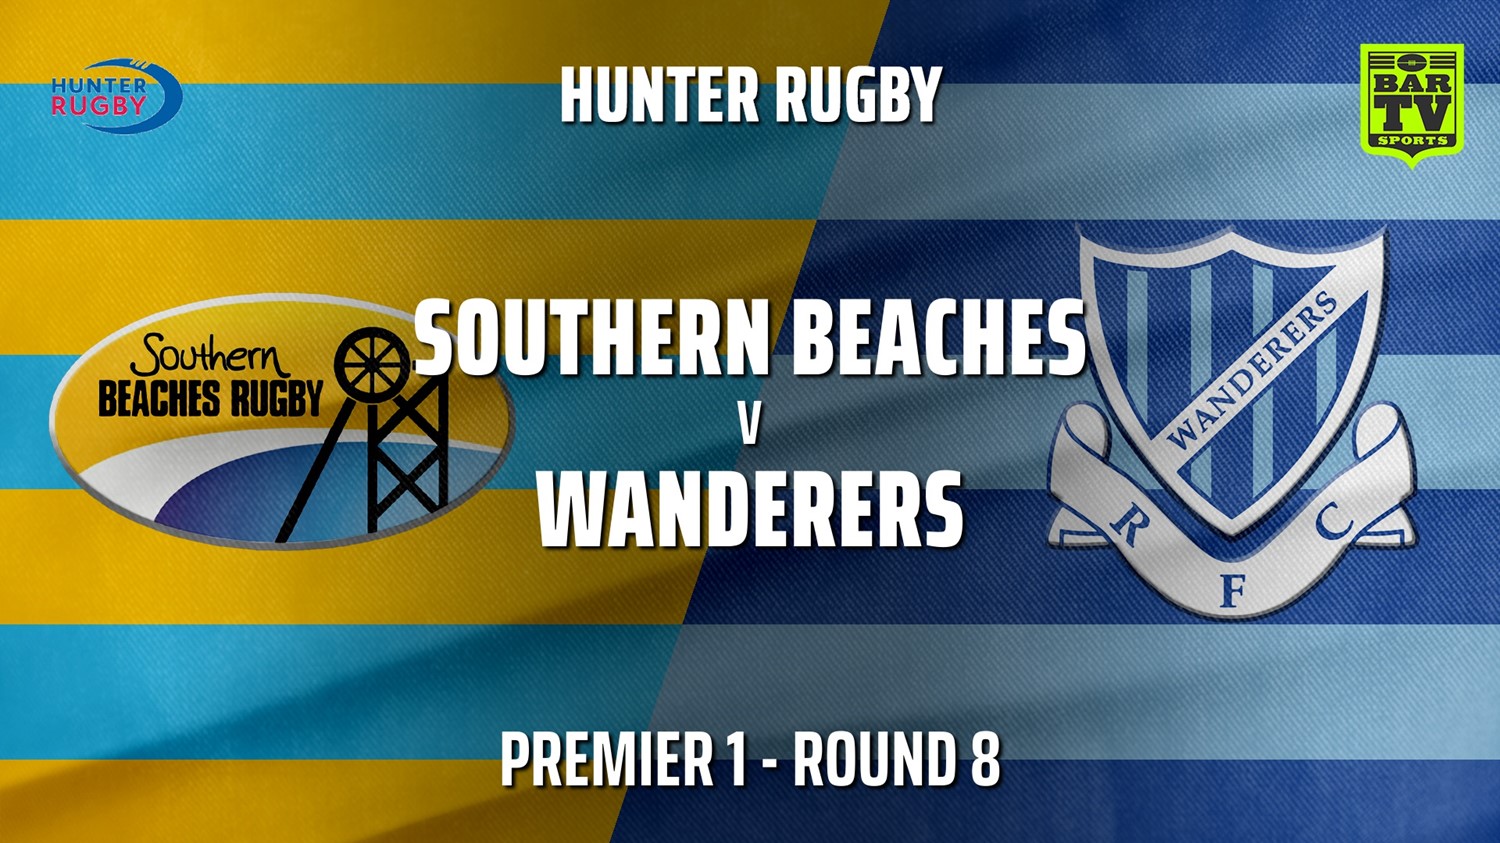 210605-HRU Round 8 - Premier 1 - Southern Beaches v Wanderers Minigame Slate Image